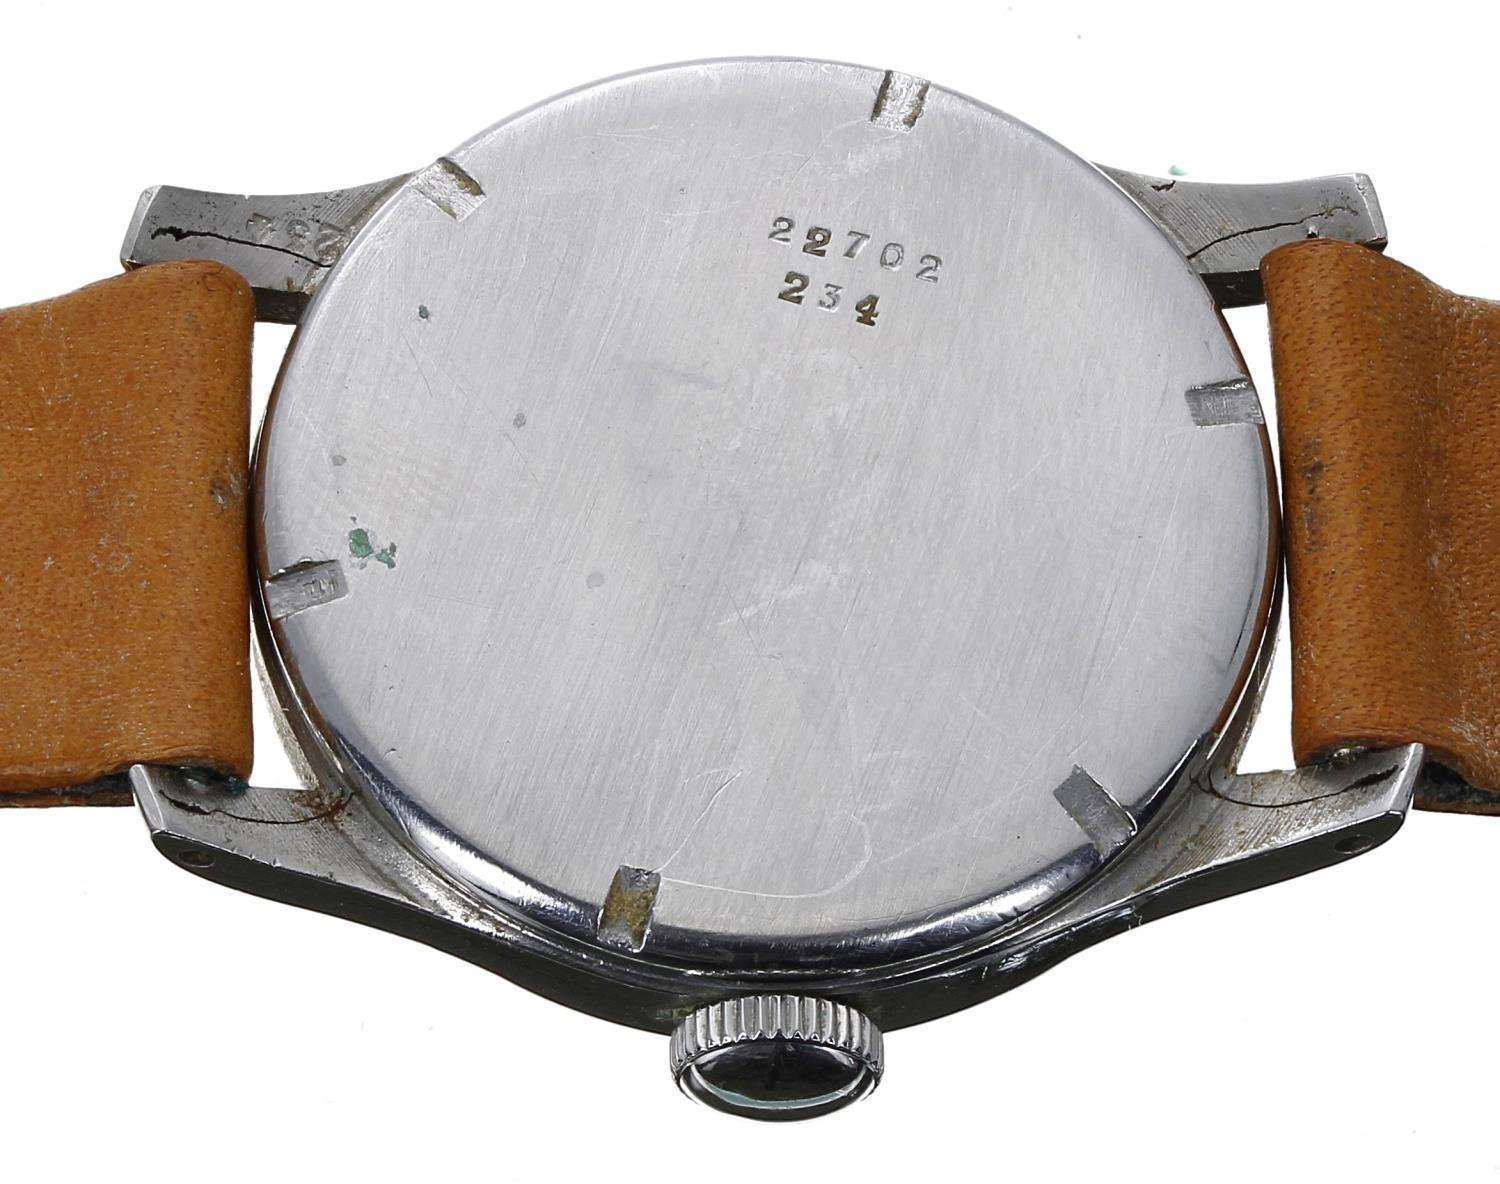 Longines WWII period stainless steel gentleman's wristwatch, case no. 22702 234, serial no. 6701xxx, - Image 2 of 2